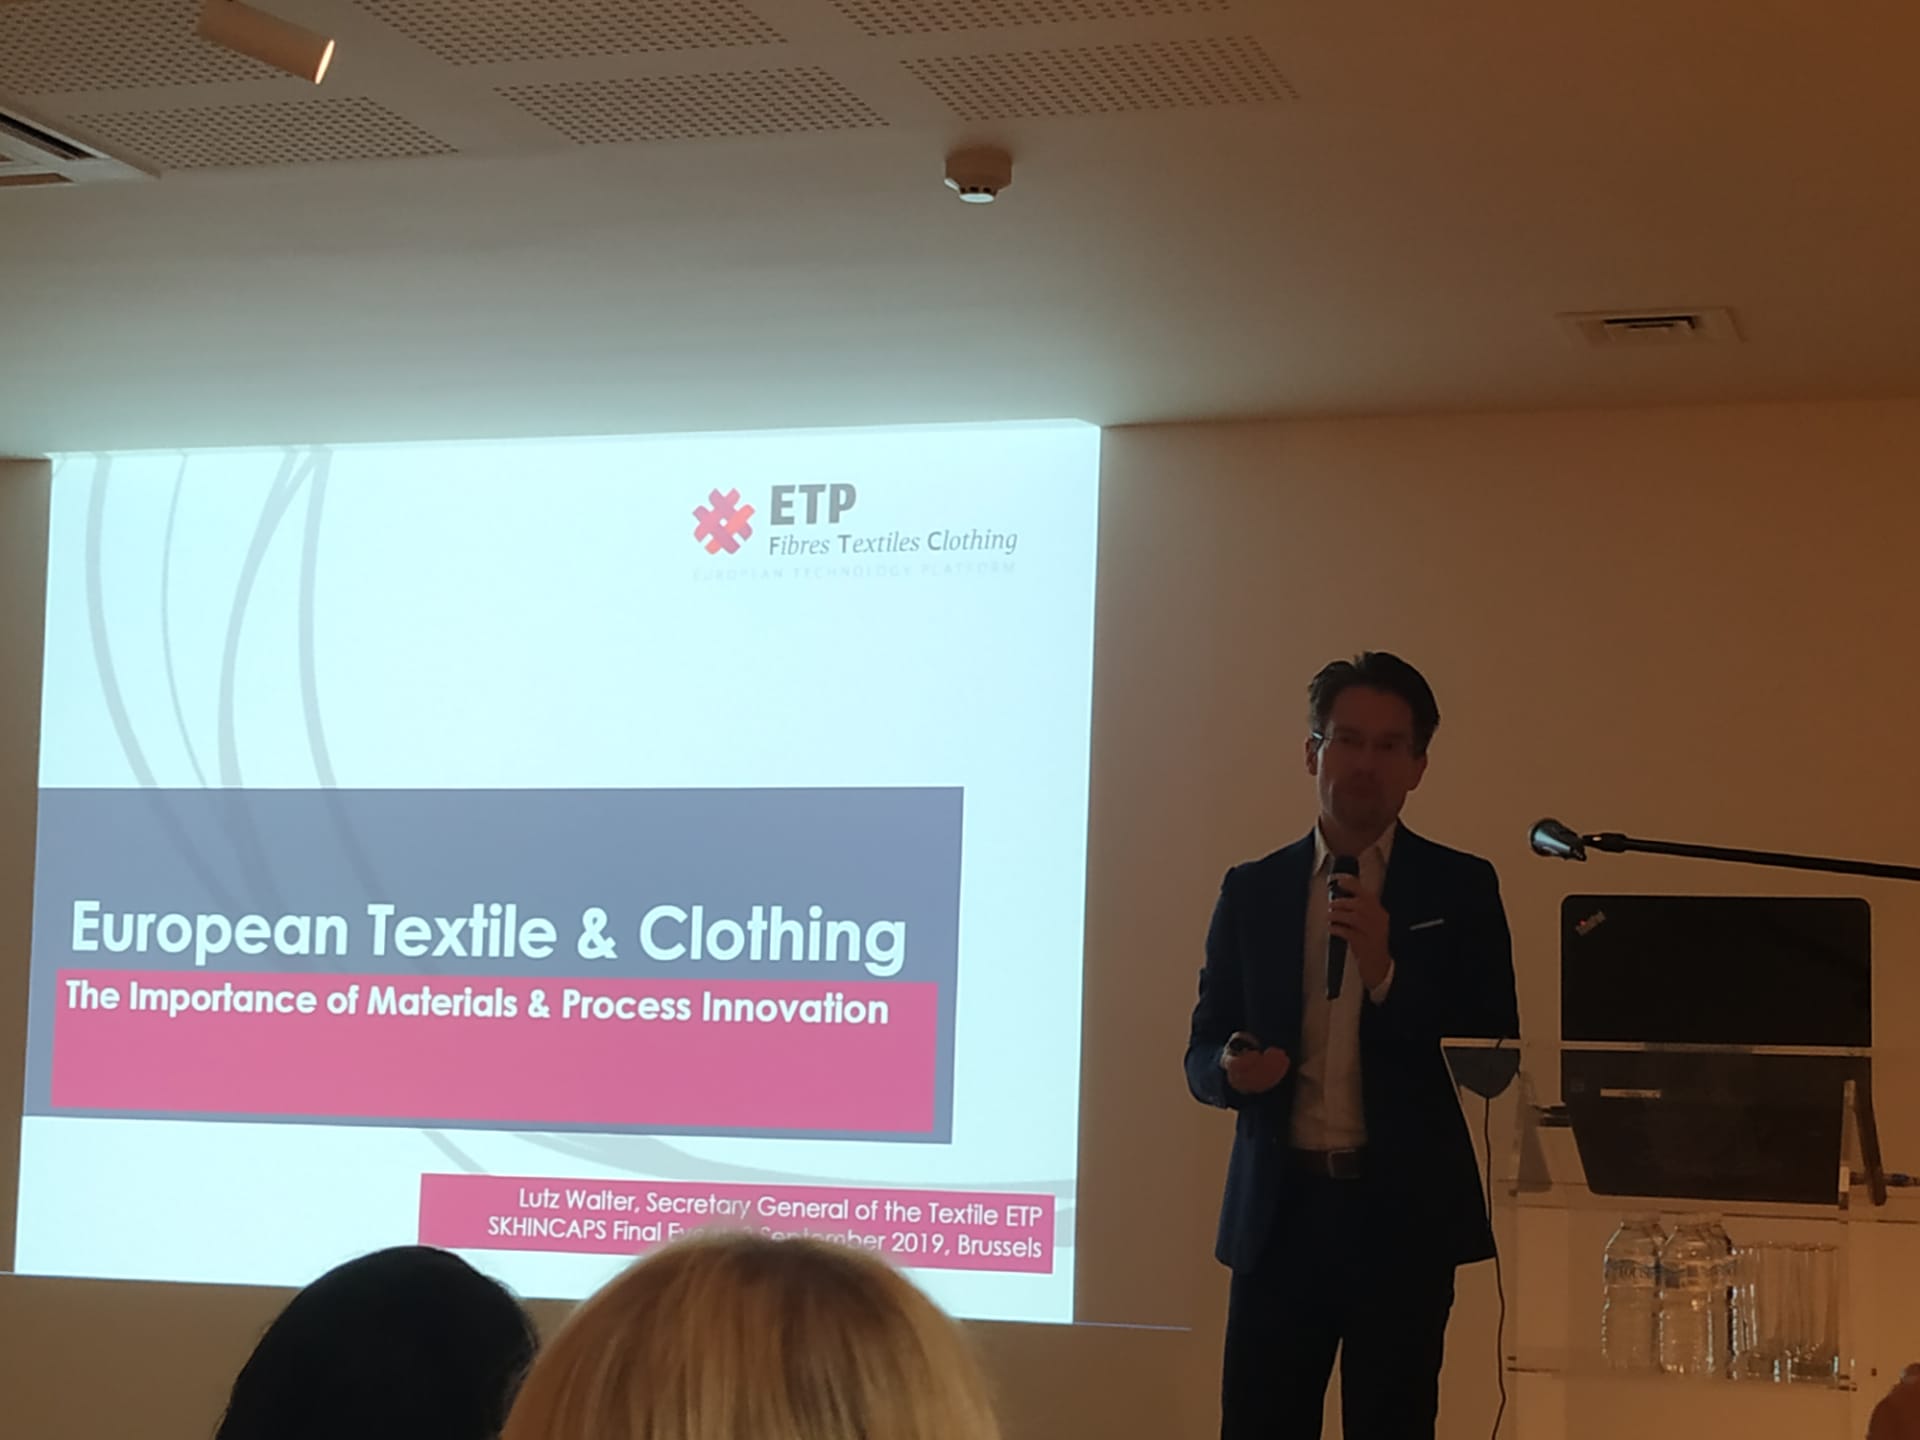 Lutz Walter, Secretary General Textile ETP